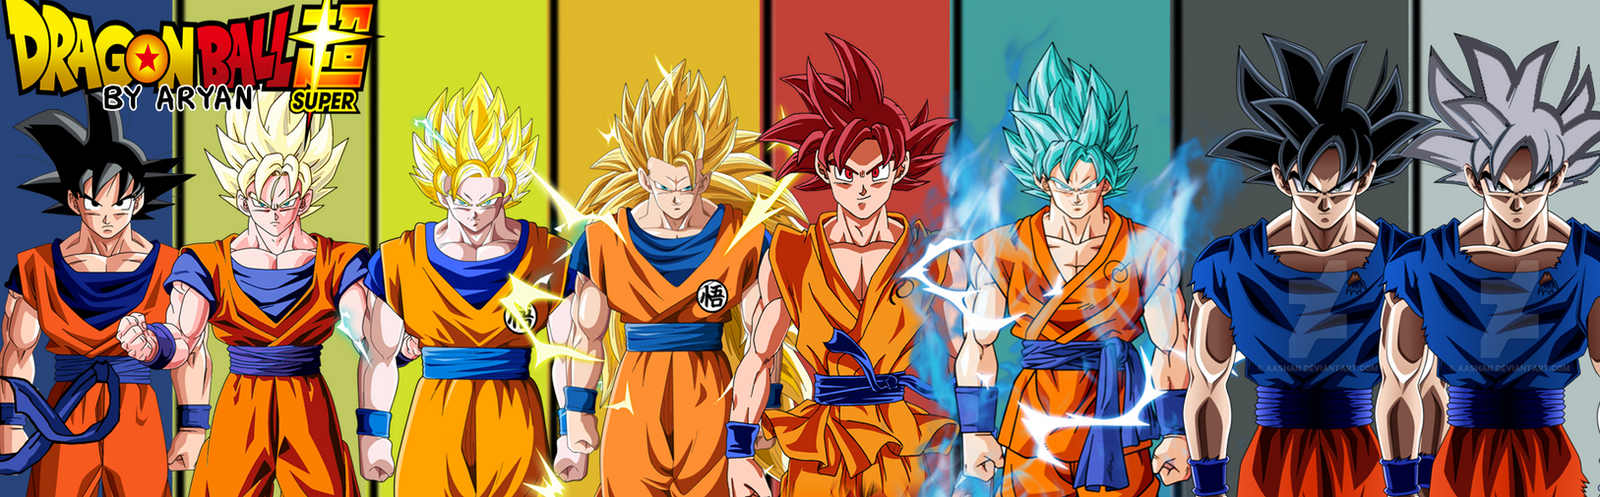 Goku All Super Saiyan Forms Poster/Wallpaper by aryanxcreation on ...